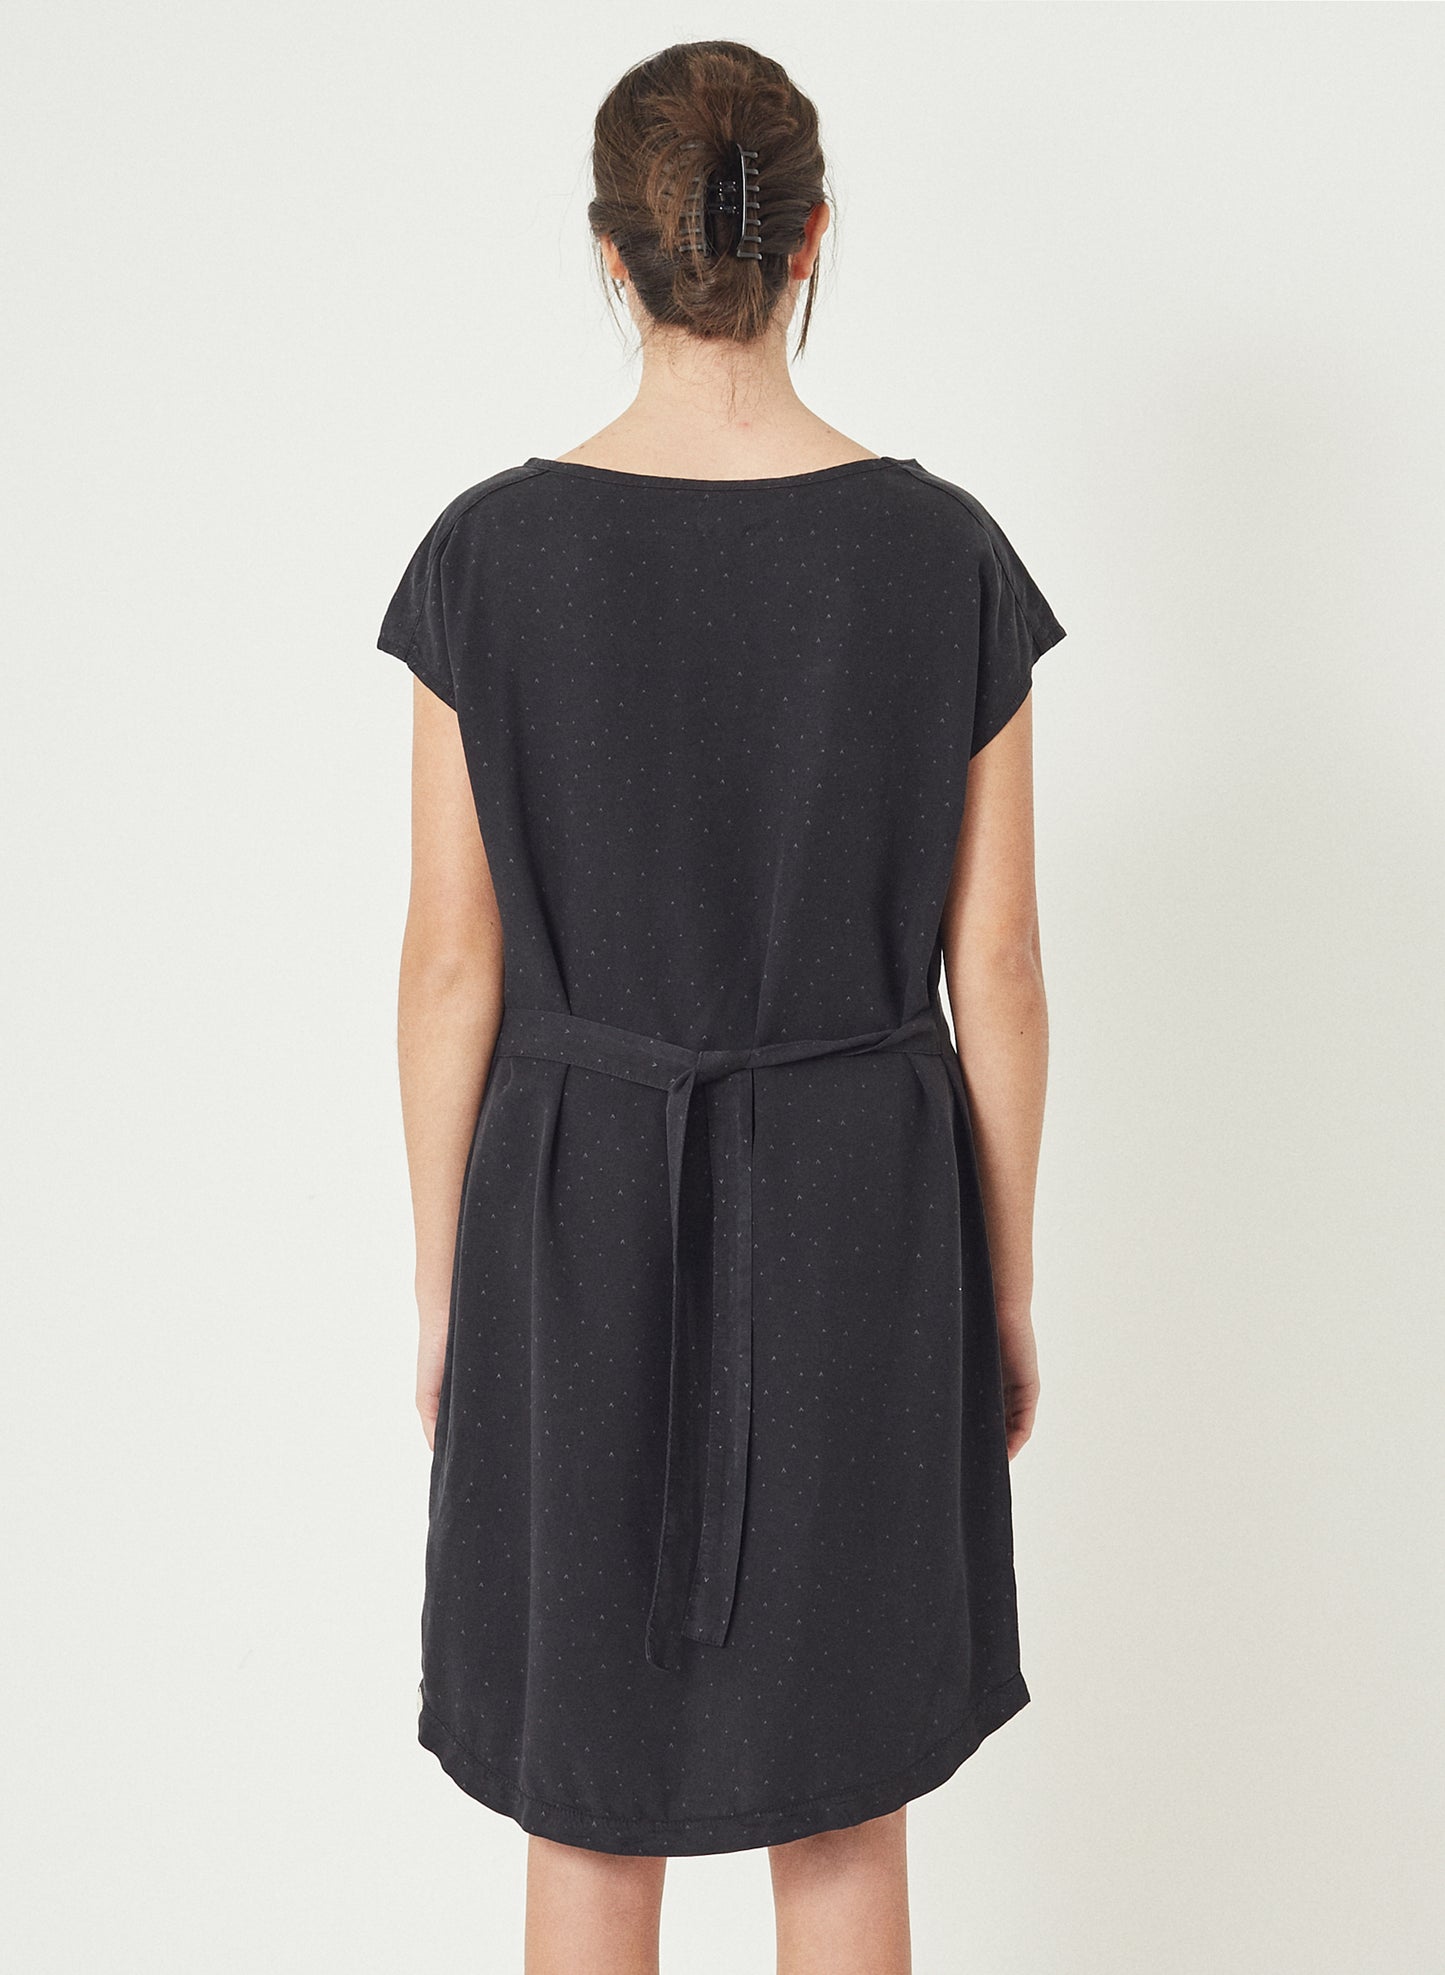 DINA - Long Allover Printed Tencel™ Dress - Black